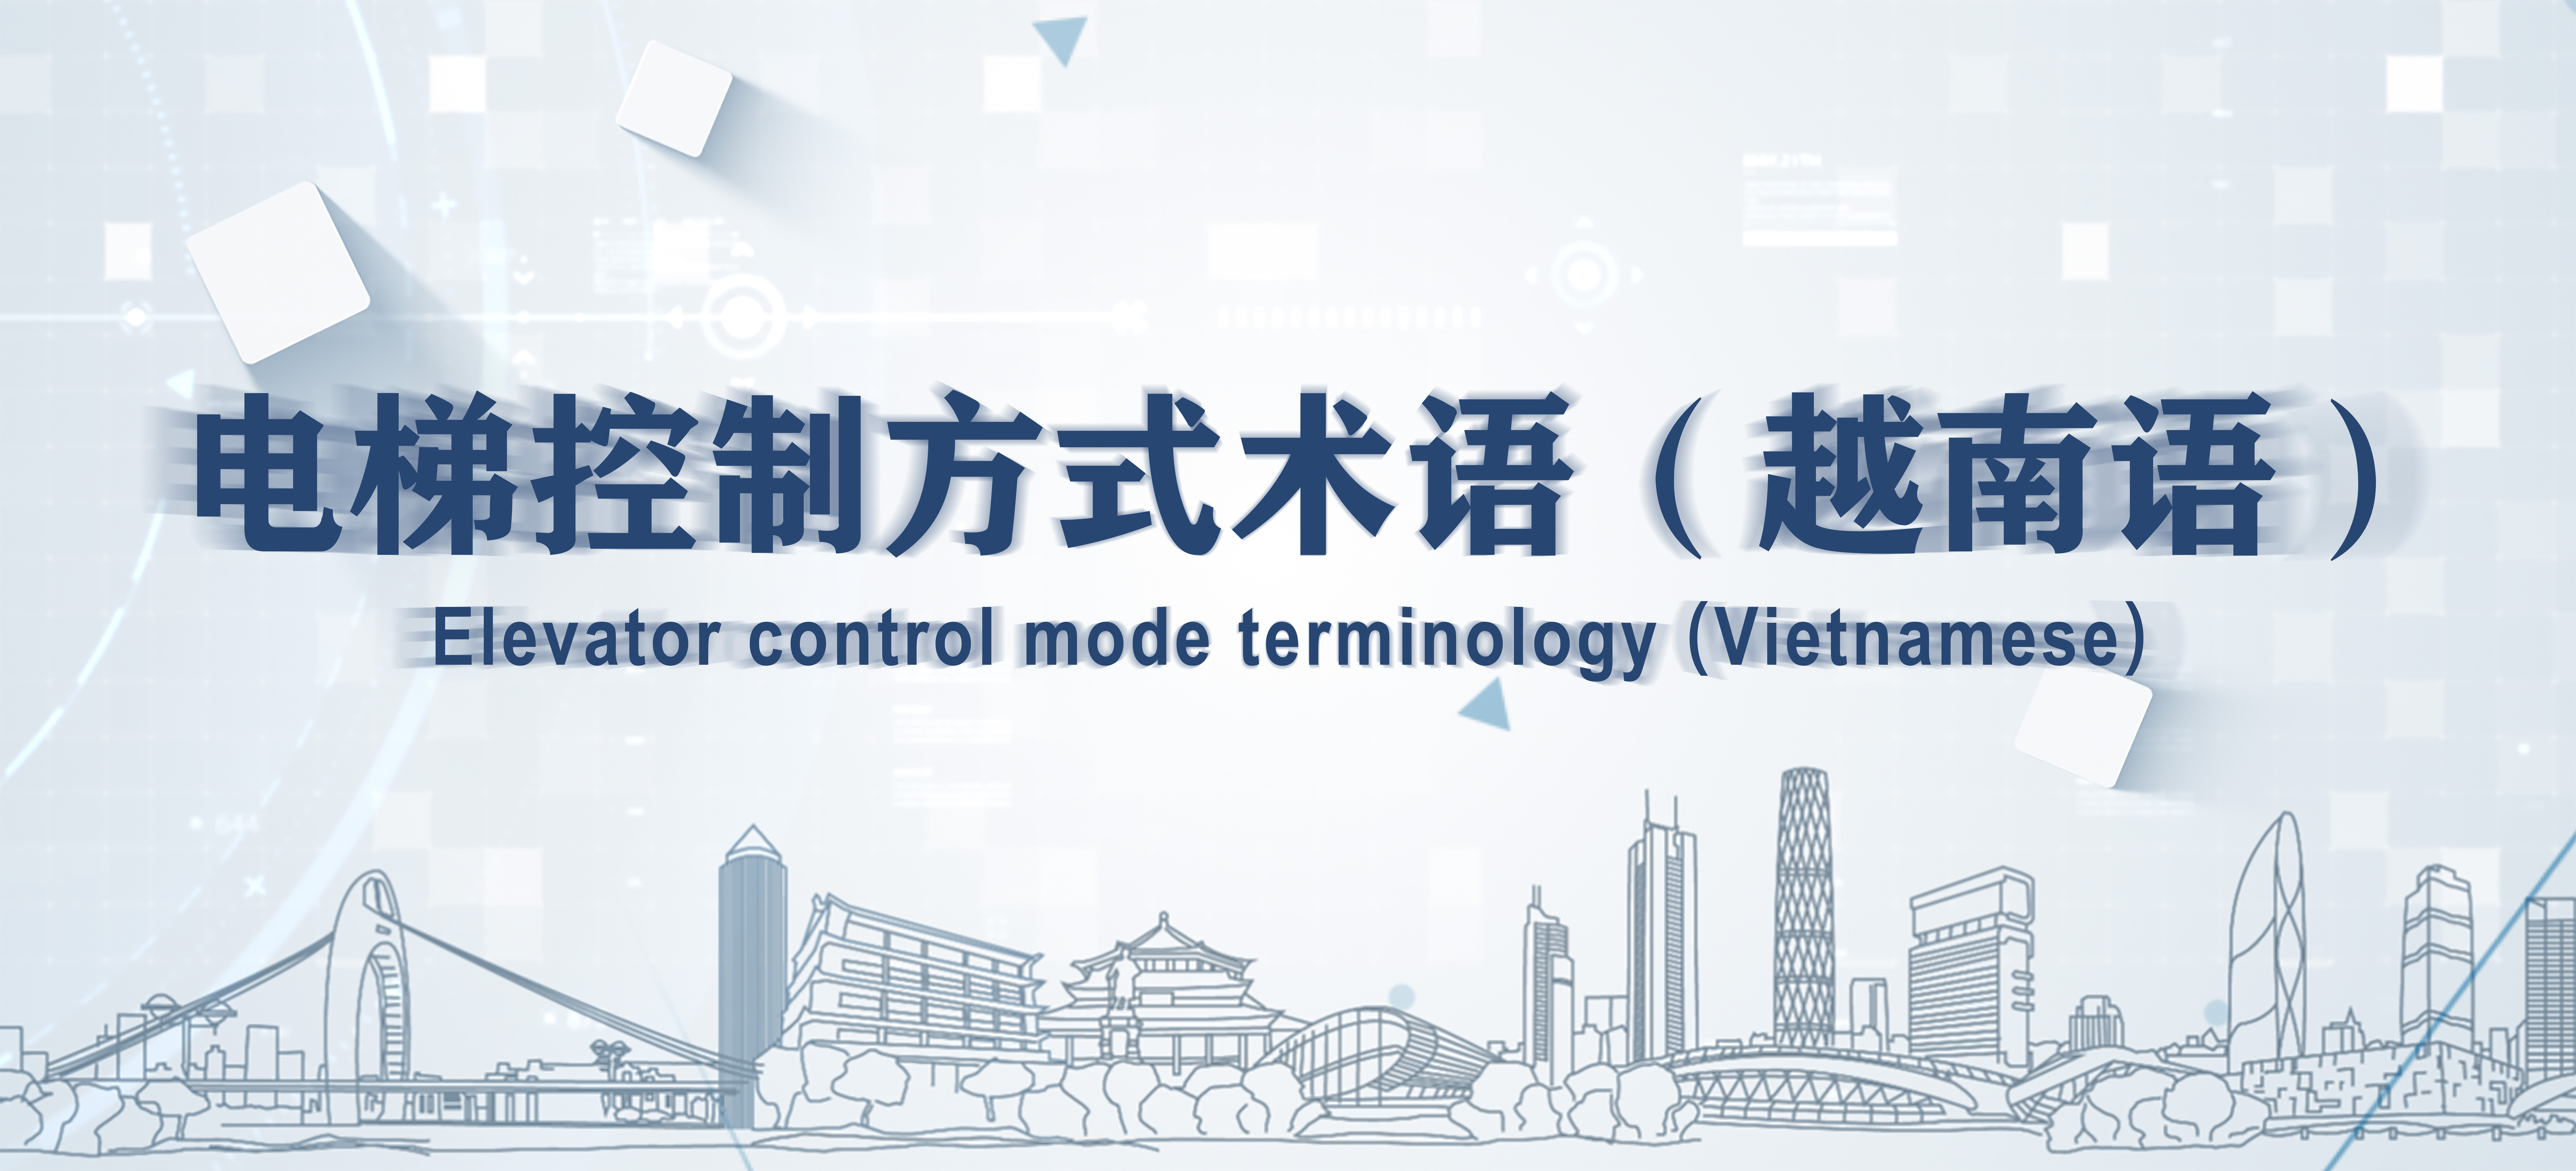 Elevator control mode terminology (Vietnamese)